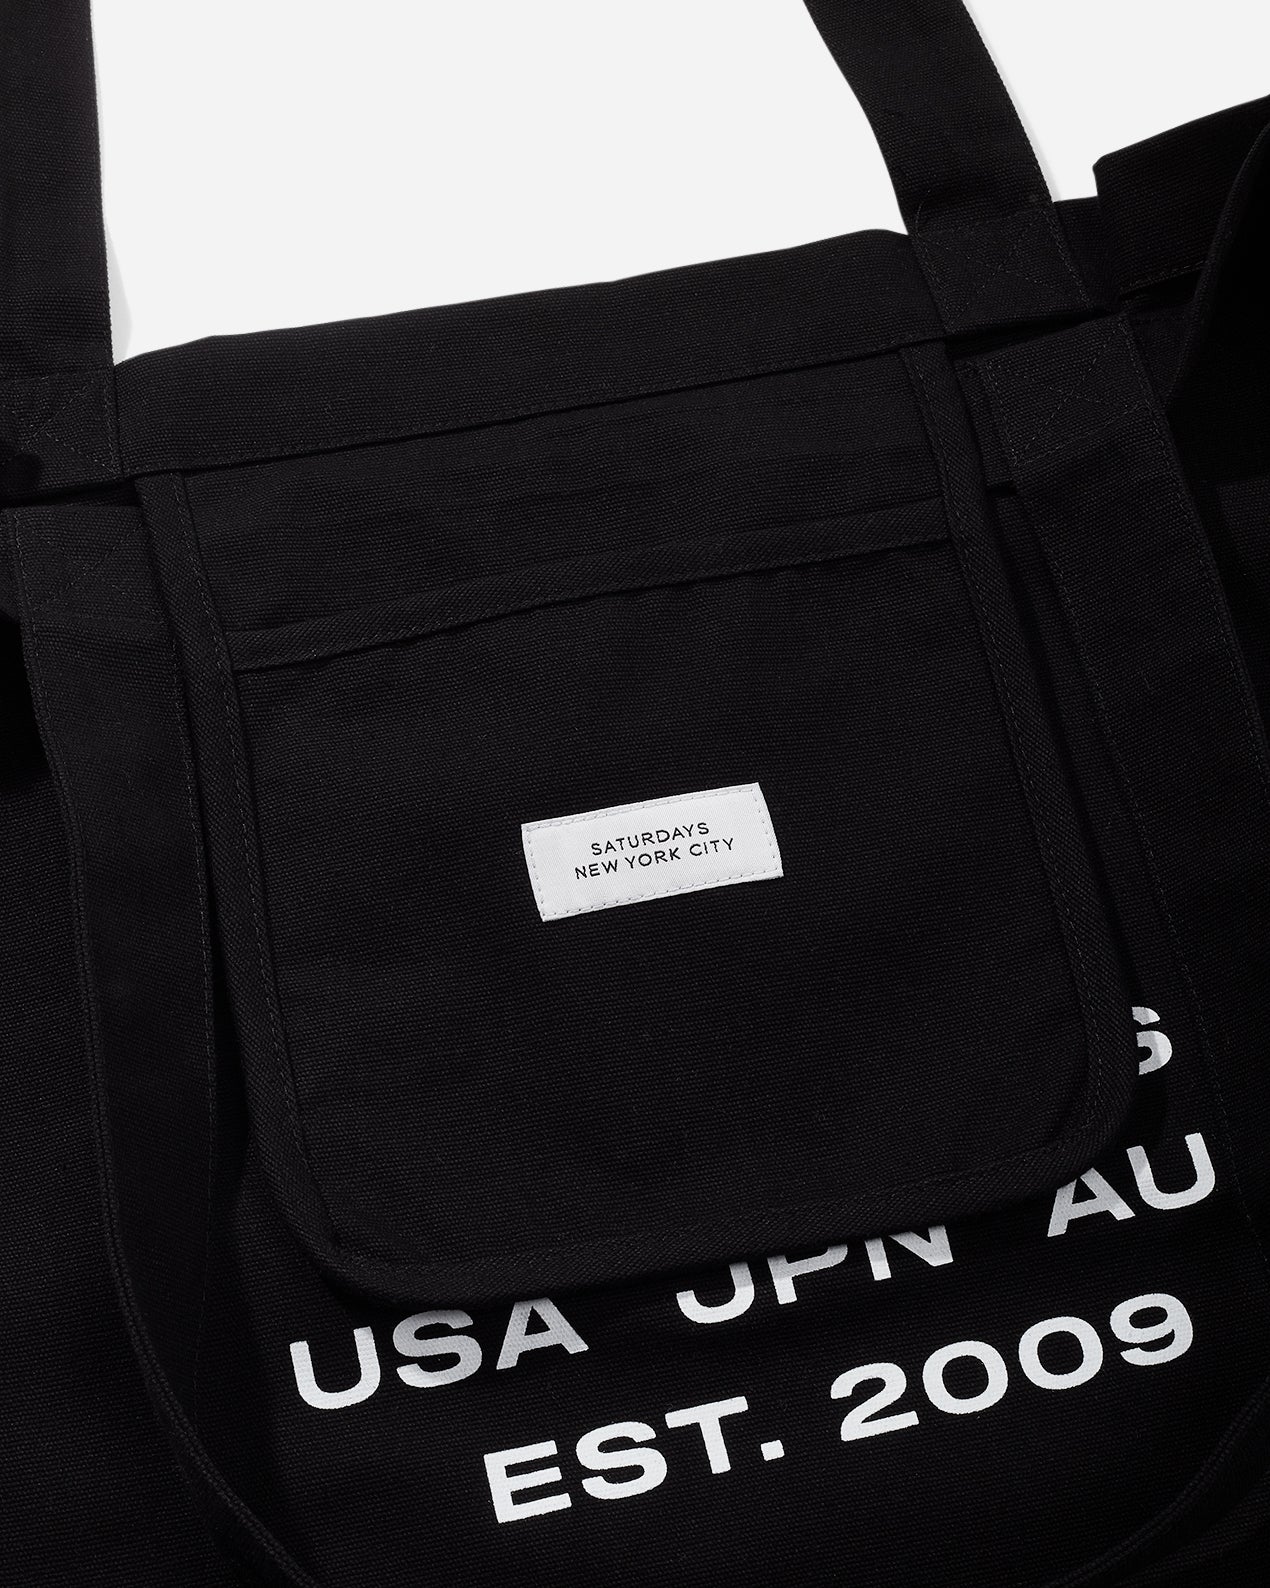 Active Lifestyle' Cream & Black Canvas Tote Bag